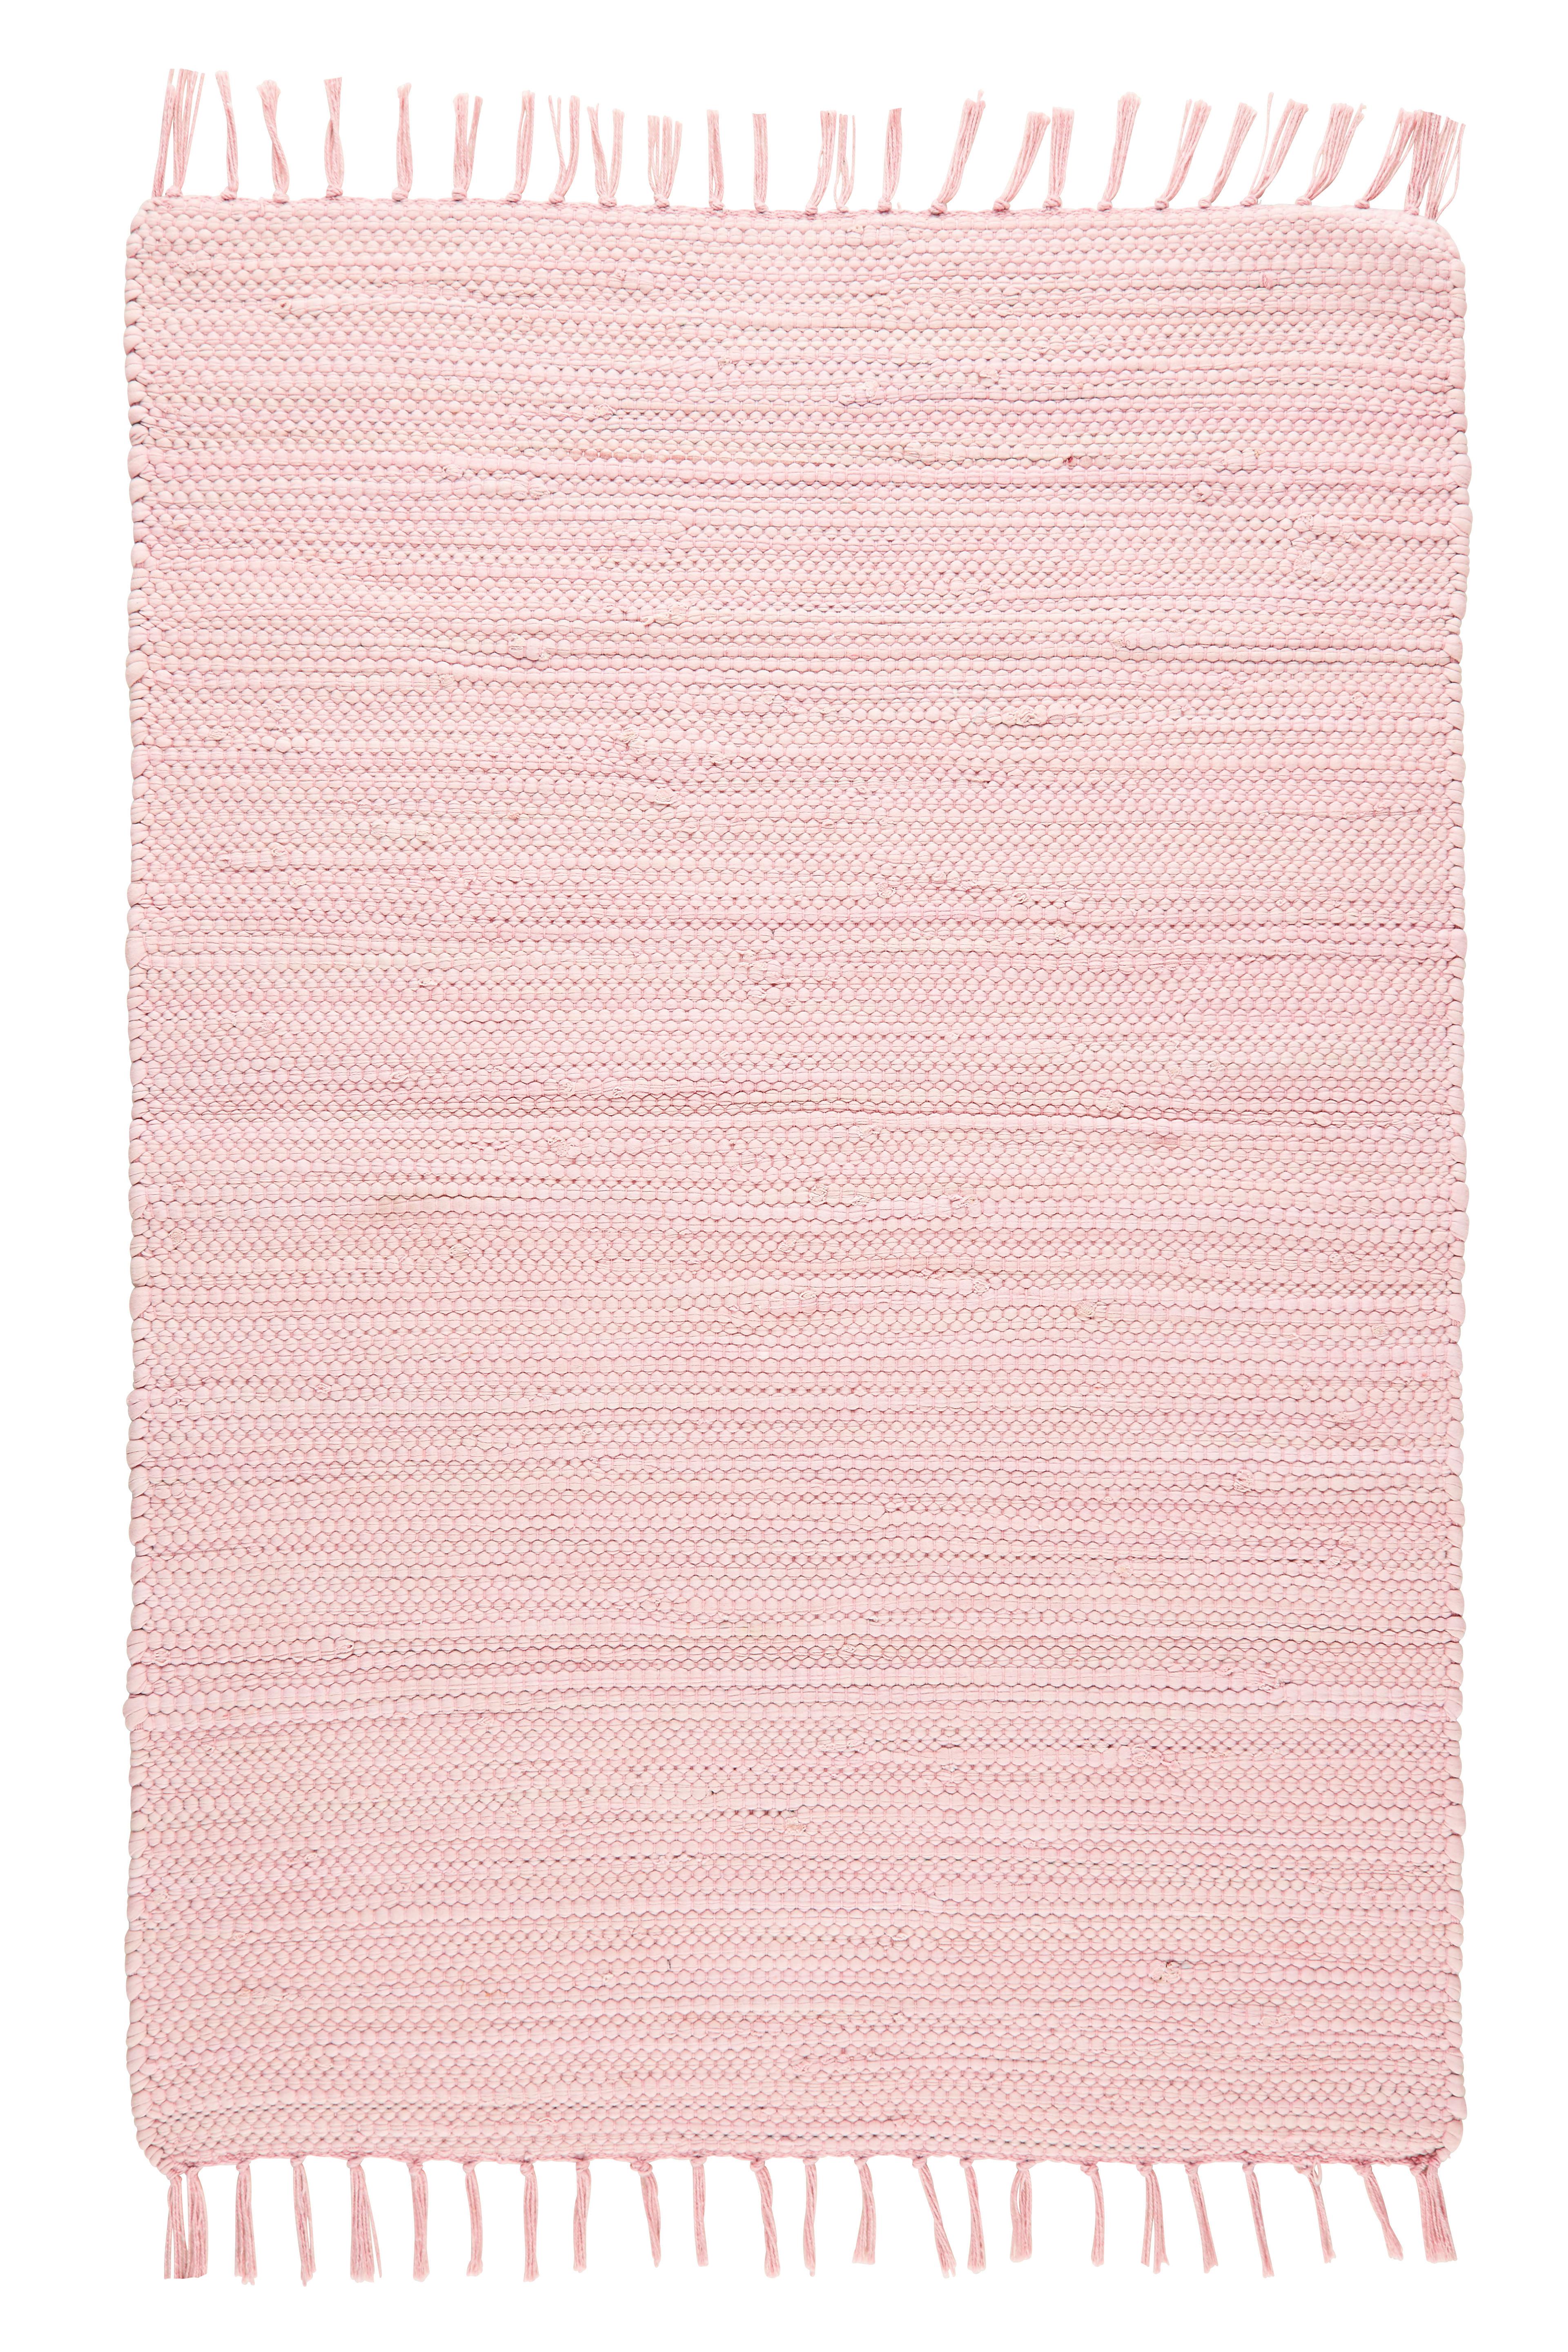 Hadrový Koberec Julia, 60/90cm, Růžová - růžová, Romantický / Rustikální, textil (60/90cm) - Modern Living